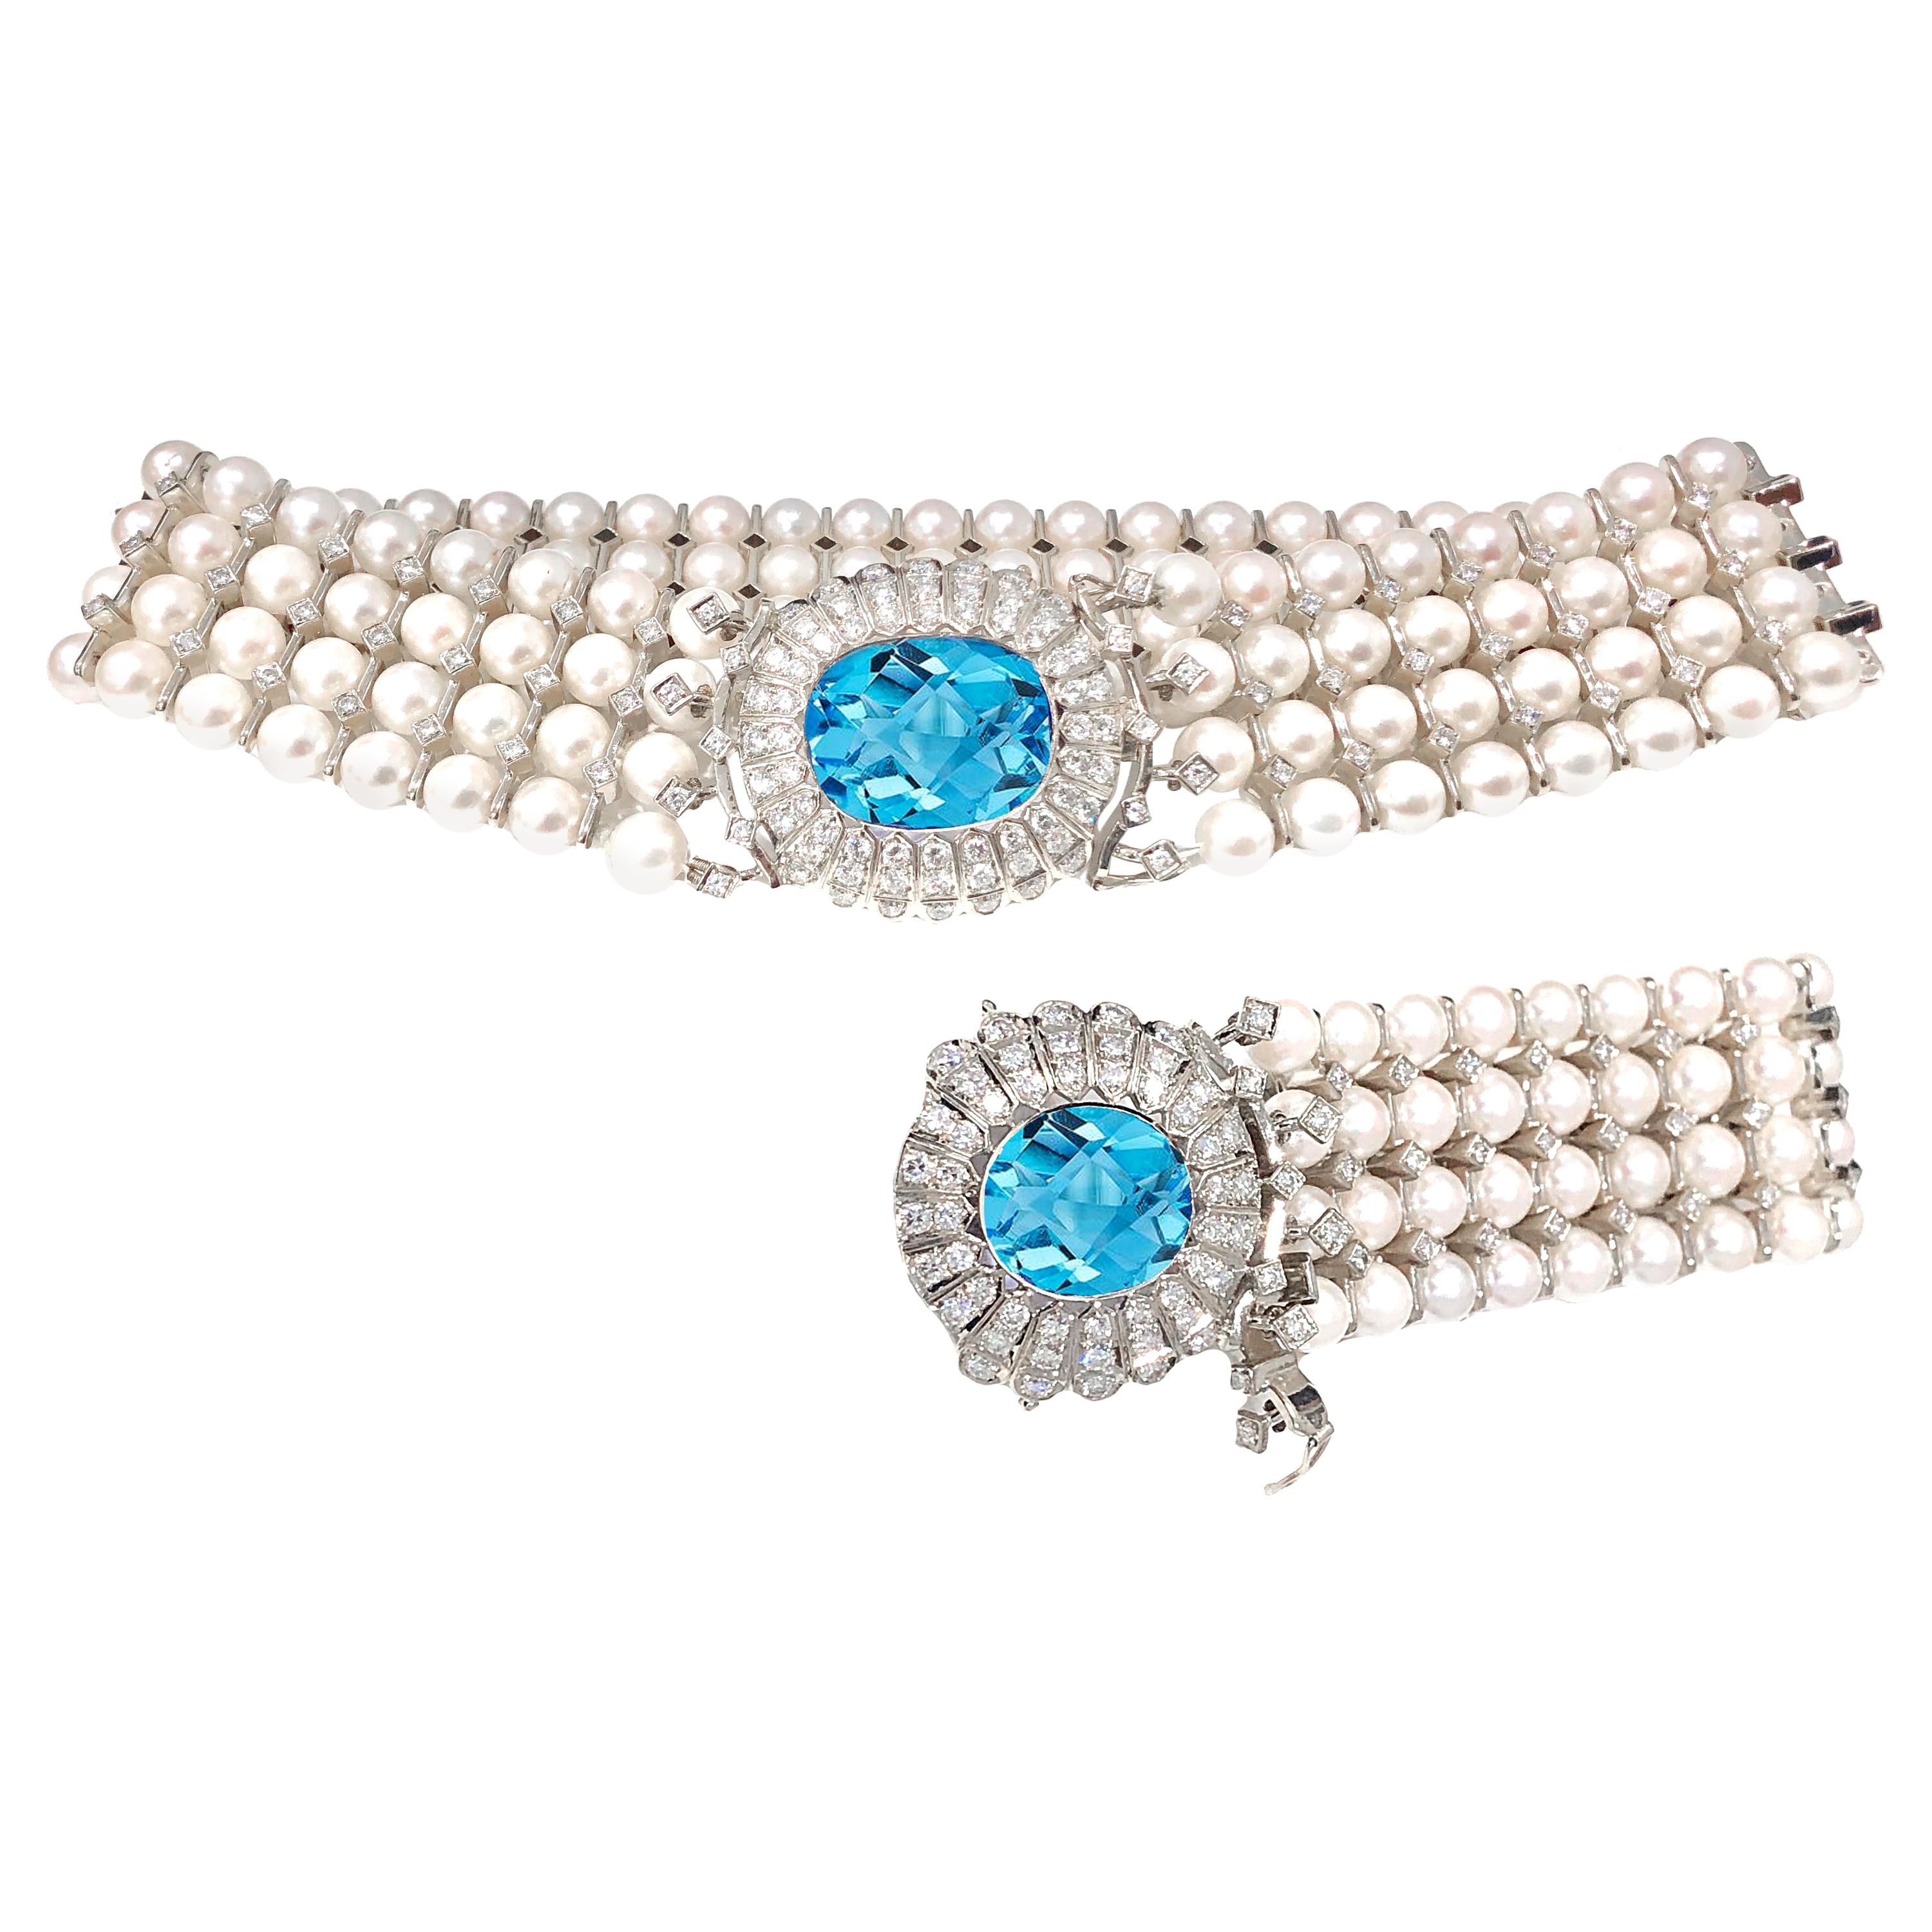 Pearl and Diamond Choker Necklace and Bracelet Set, Topaz Center